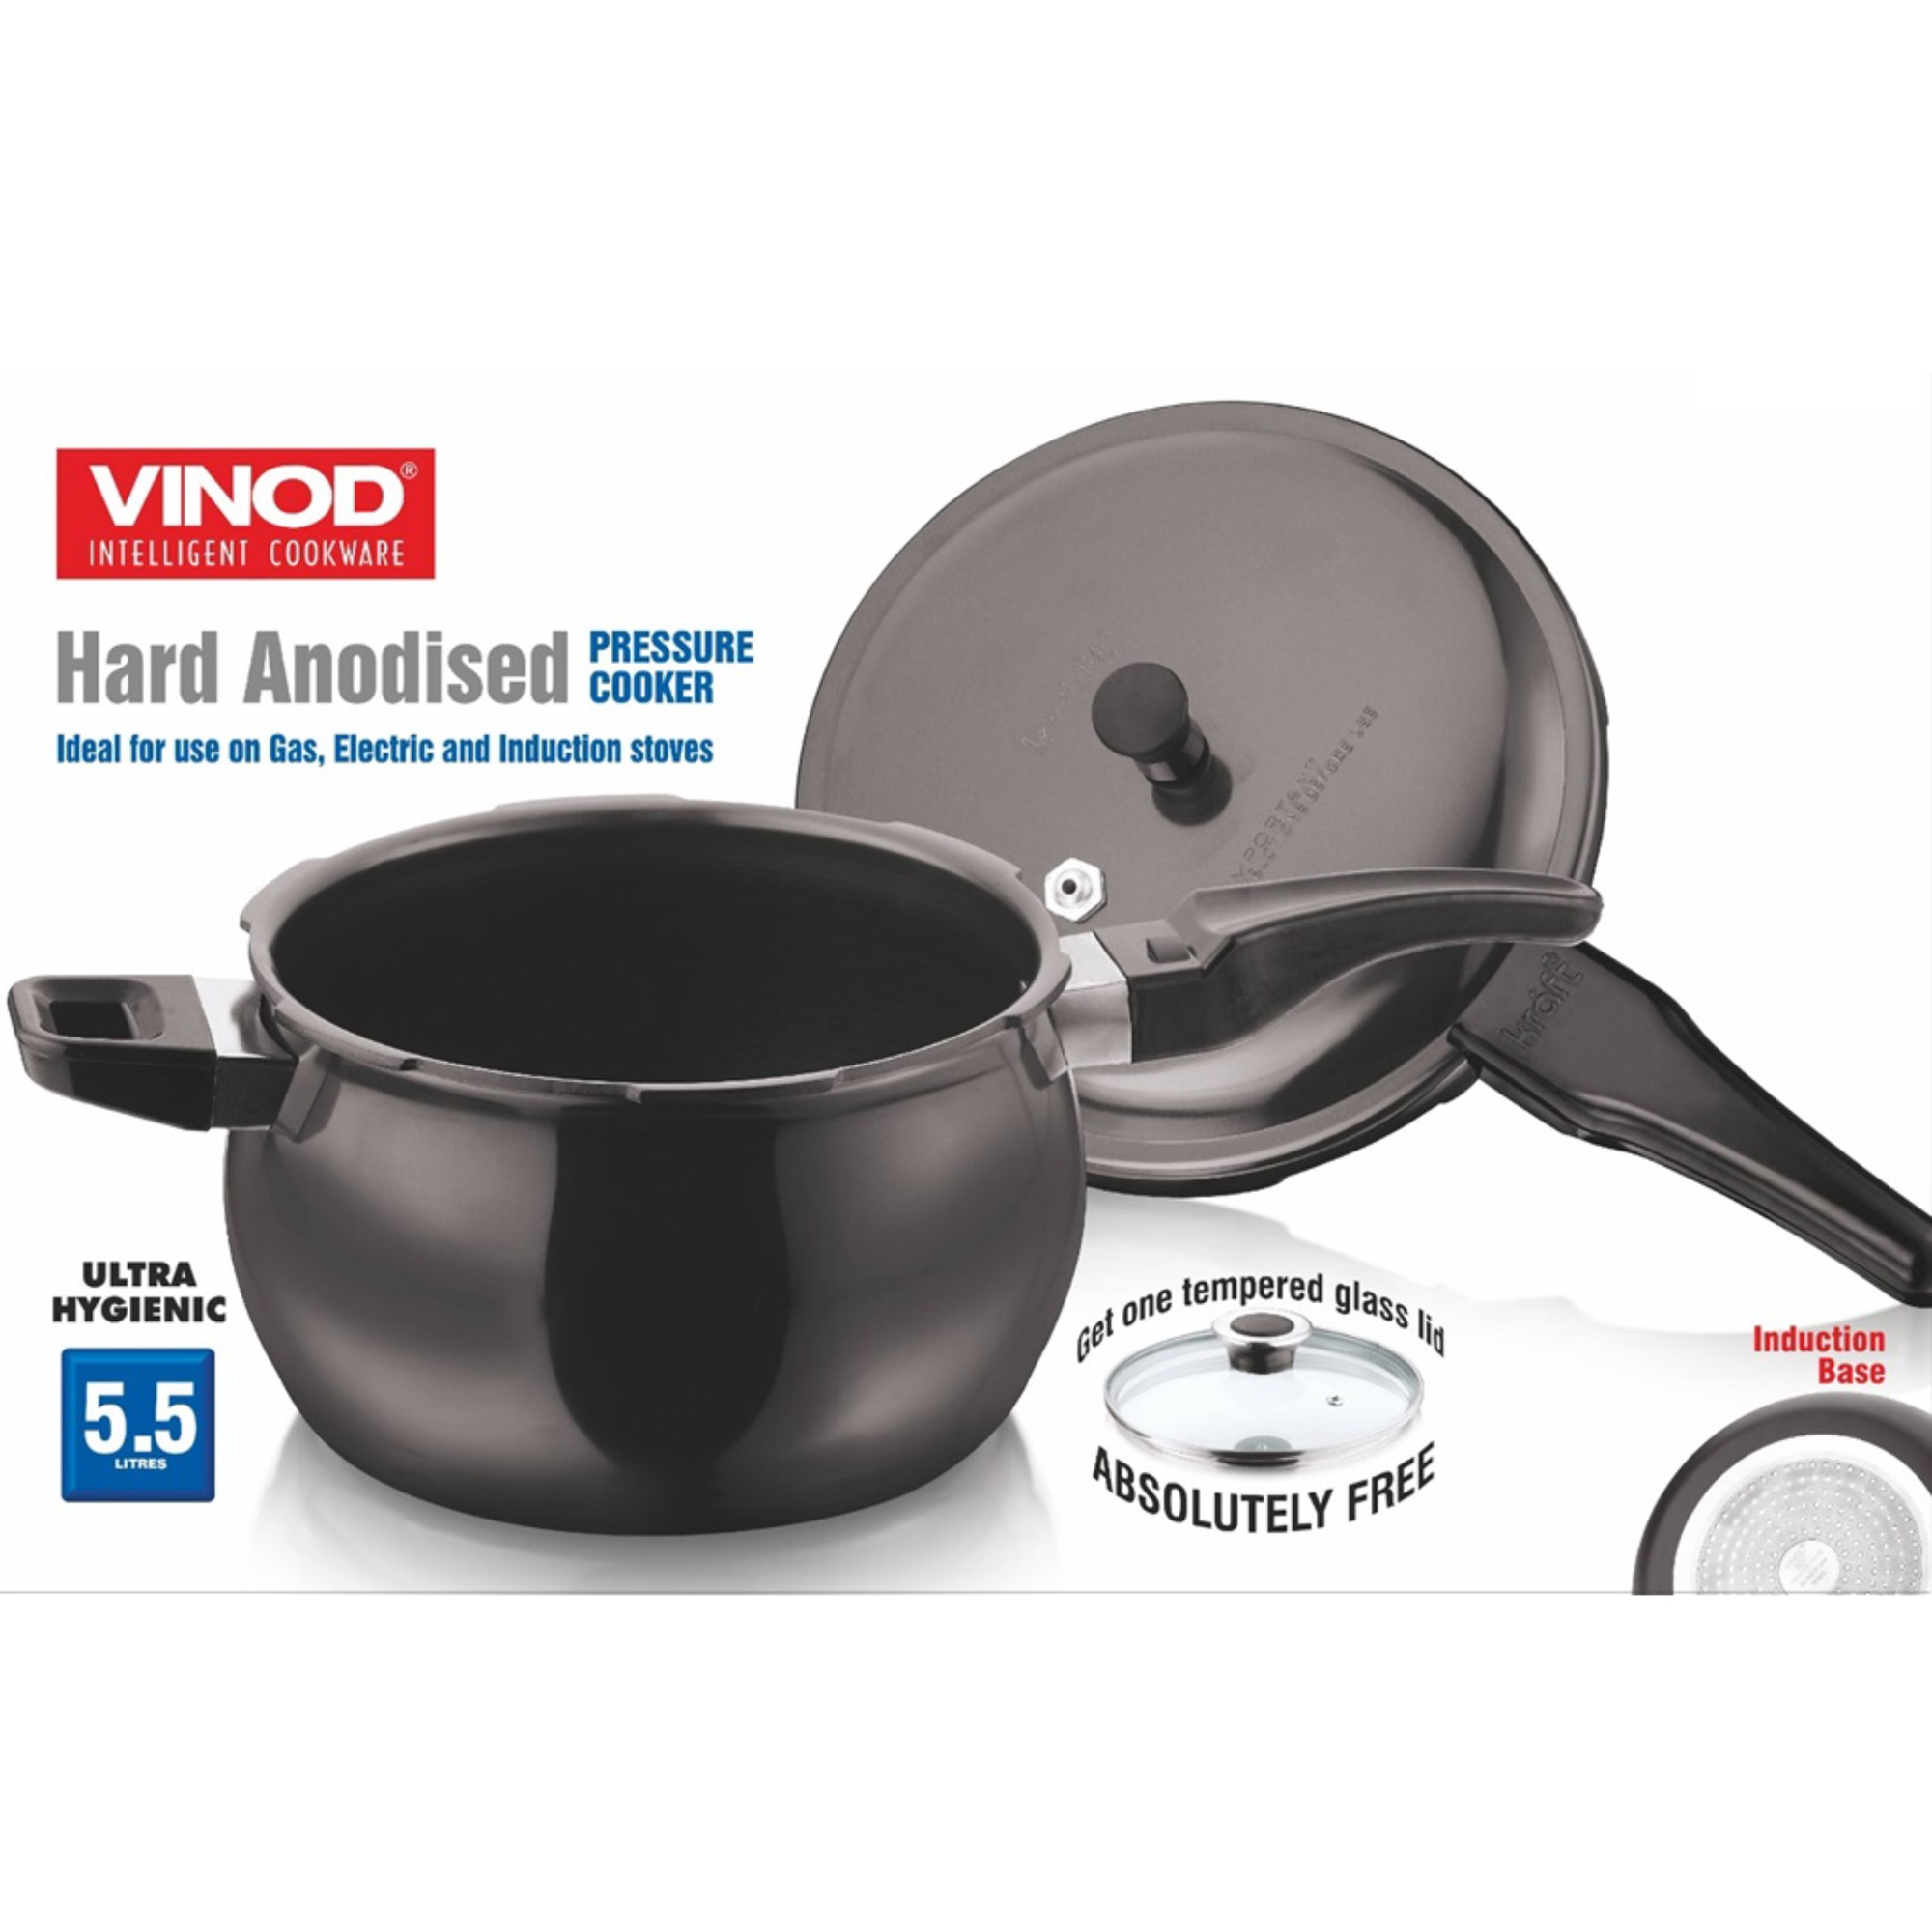 Vinod Hard Anodised Pressure Cooker - 5.5 Litre